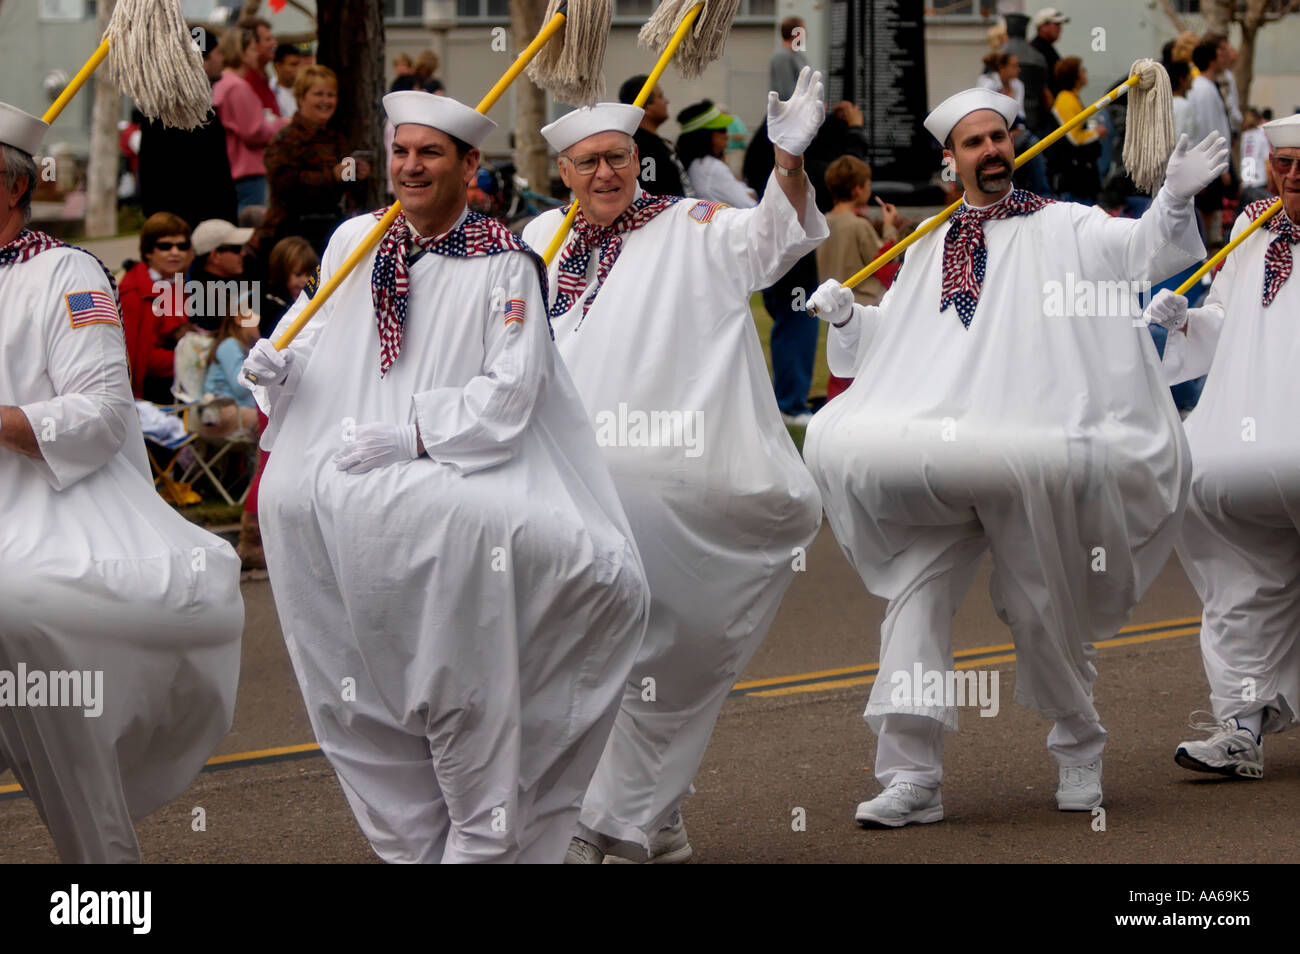 men-dressed-as-fat-sailors-march-in-parade-AA69K5.jpg